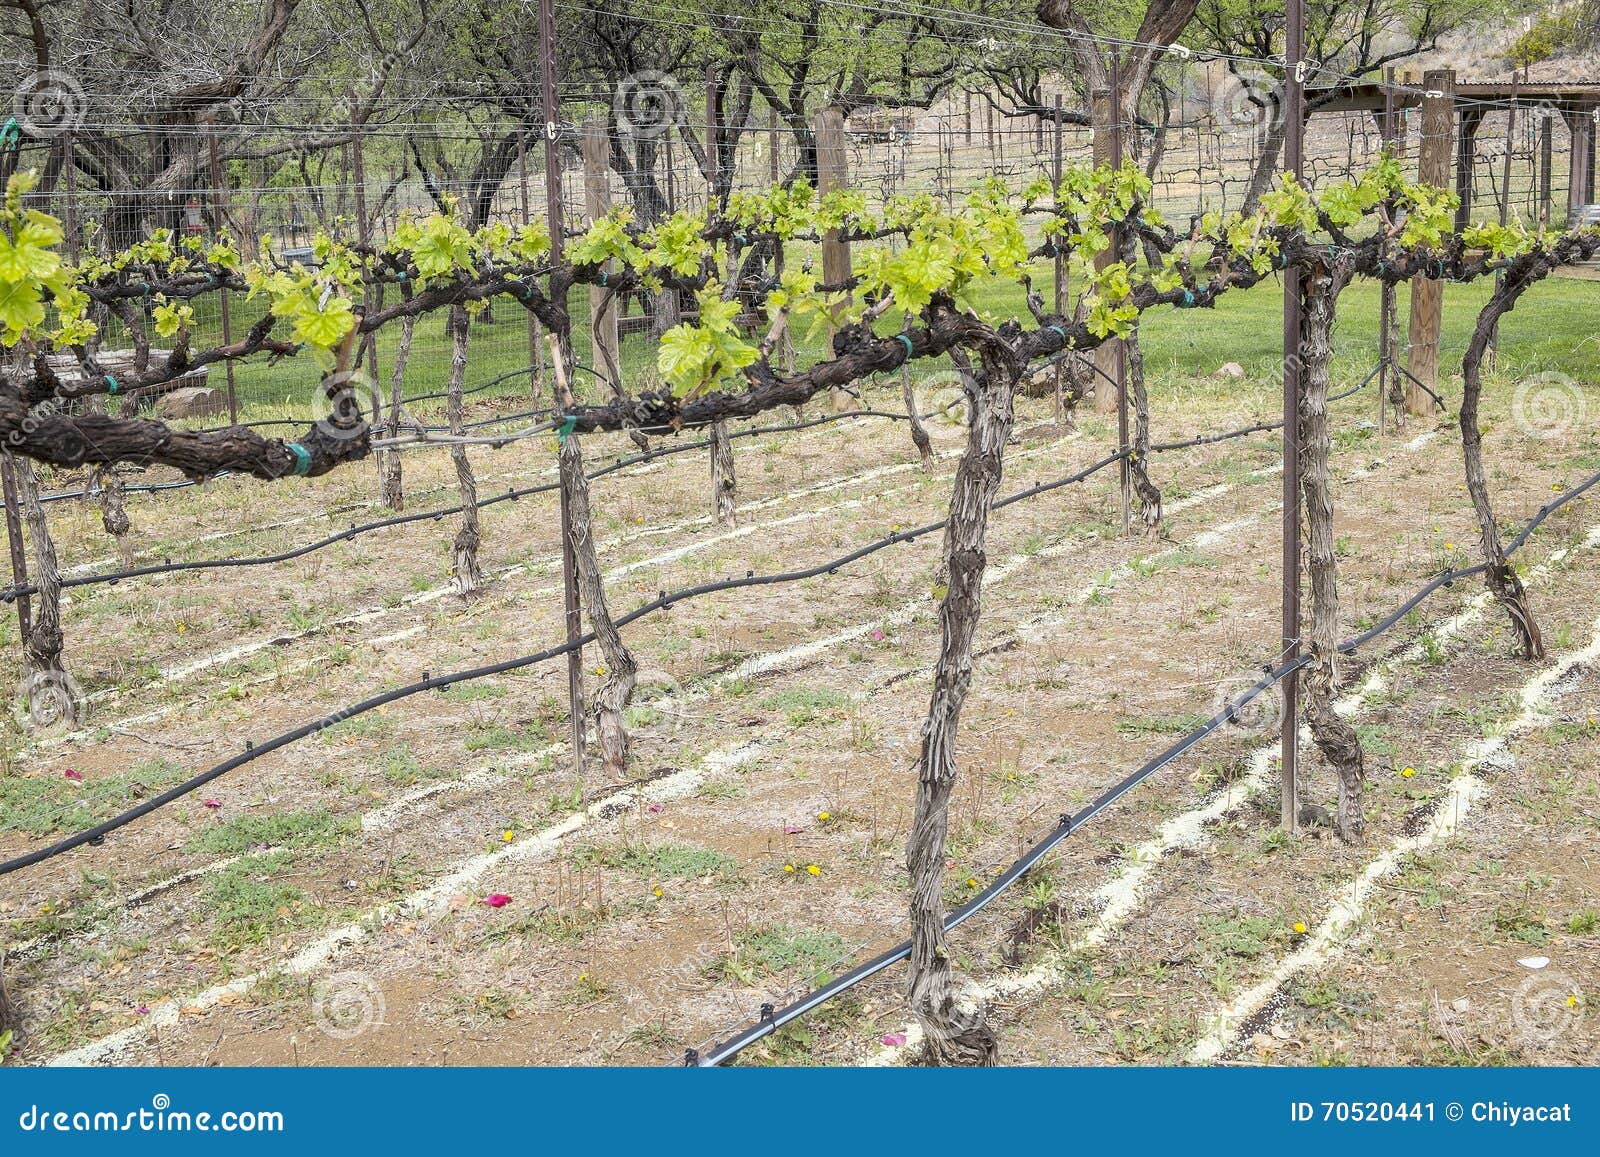 zinfandel vines and irrigation lines